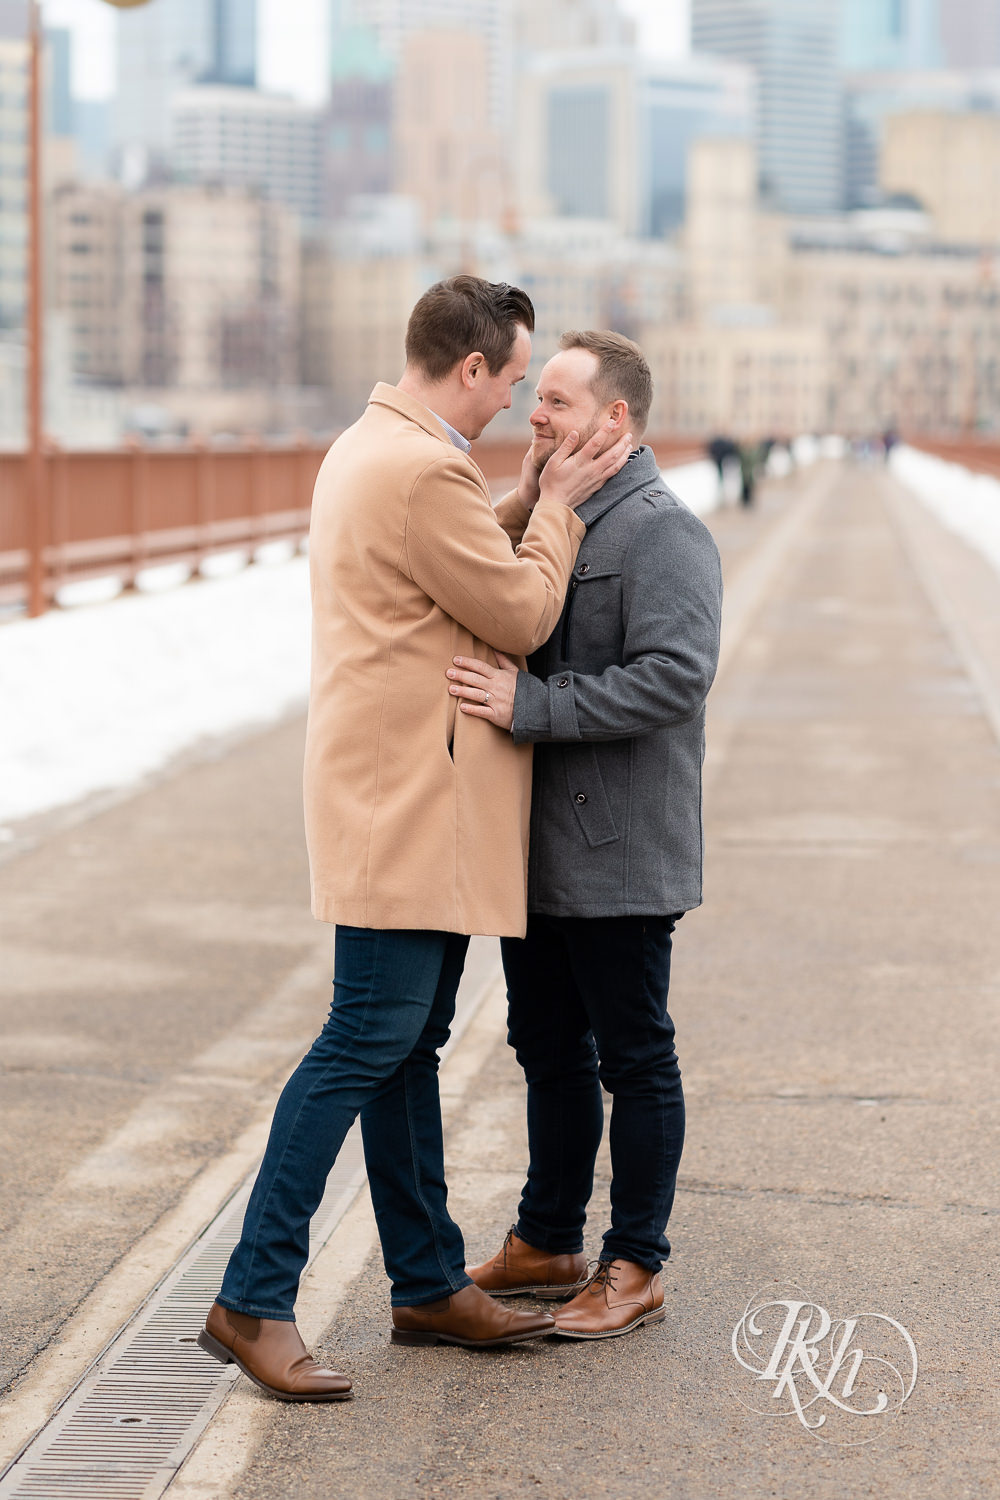 Gay men smile on the Stone Arch Bridge during the winter in Minneapolis, Minnesota.